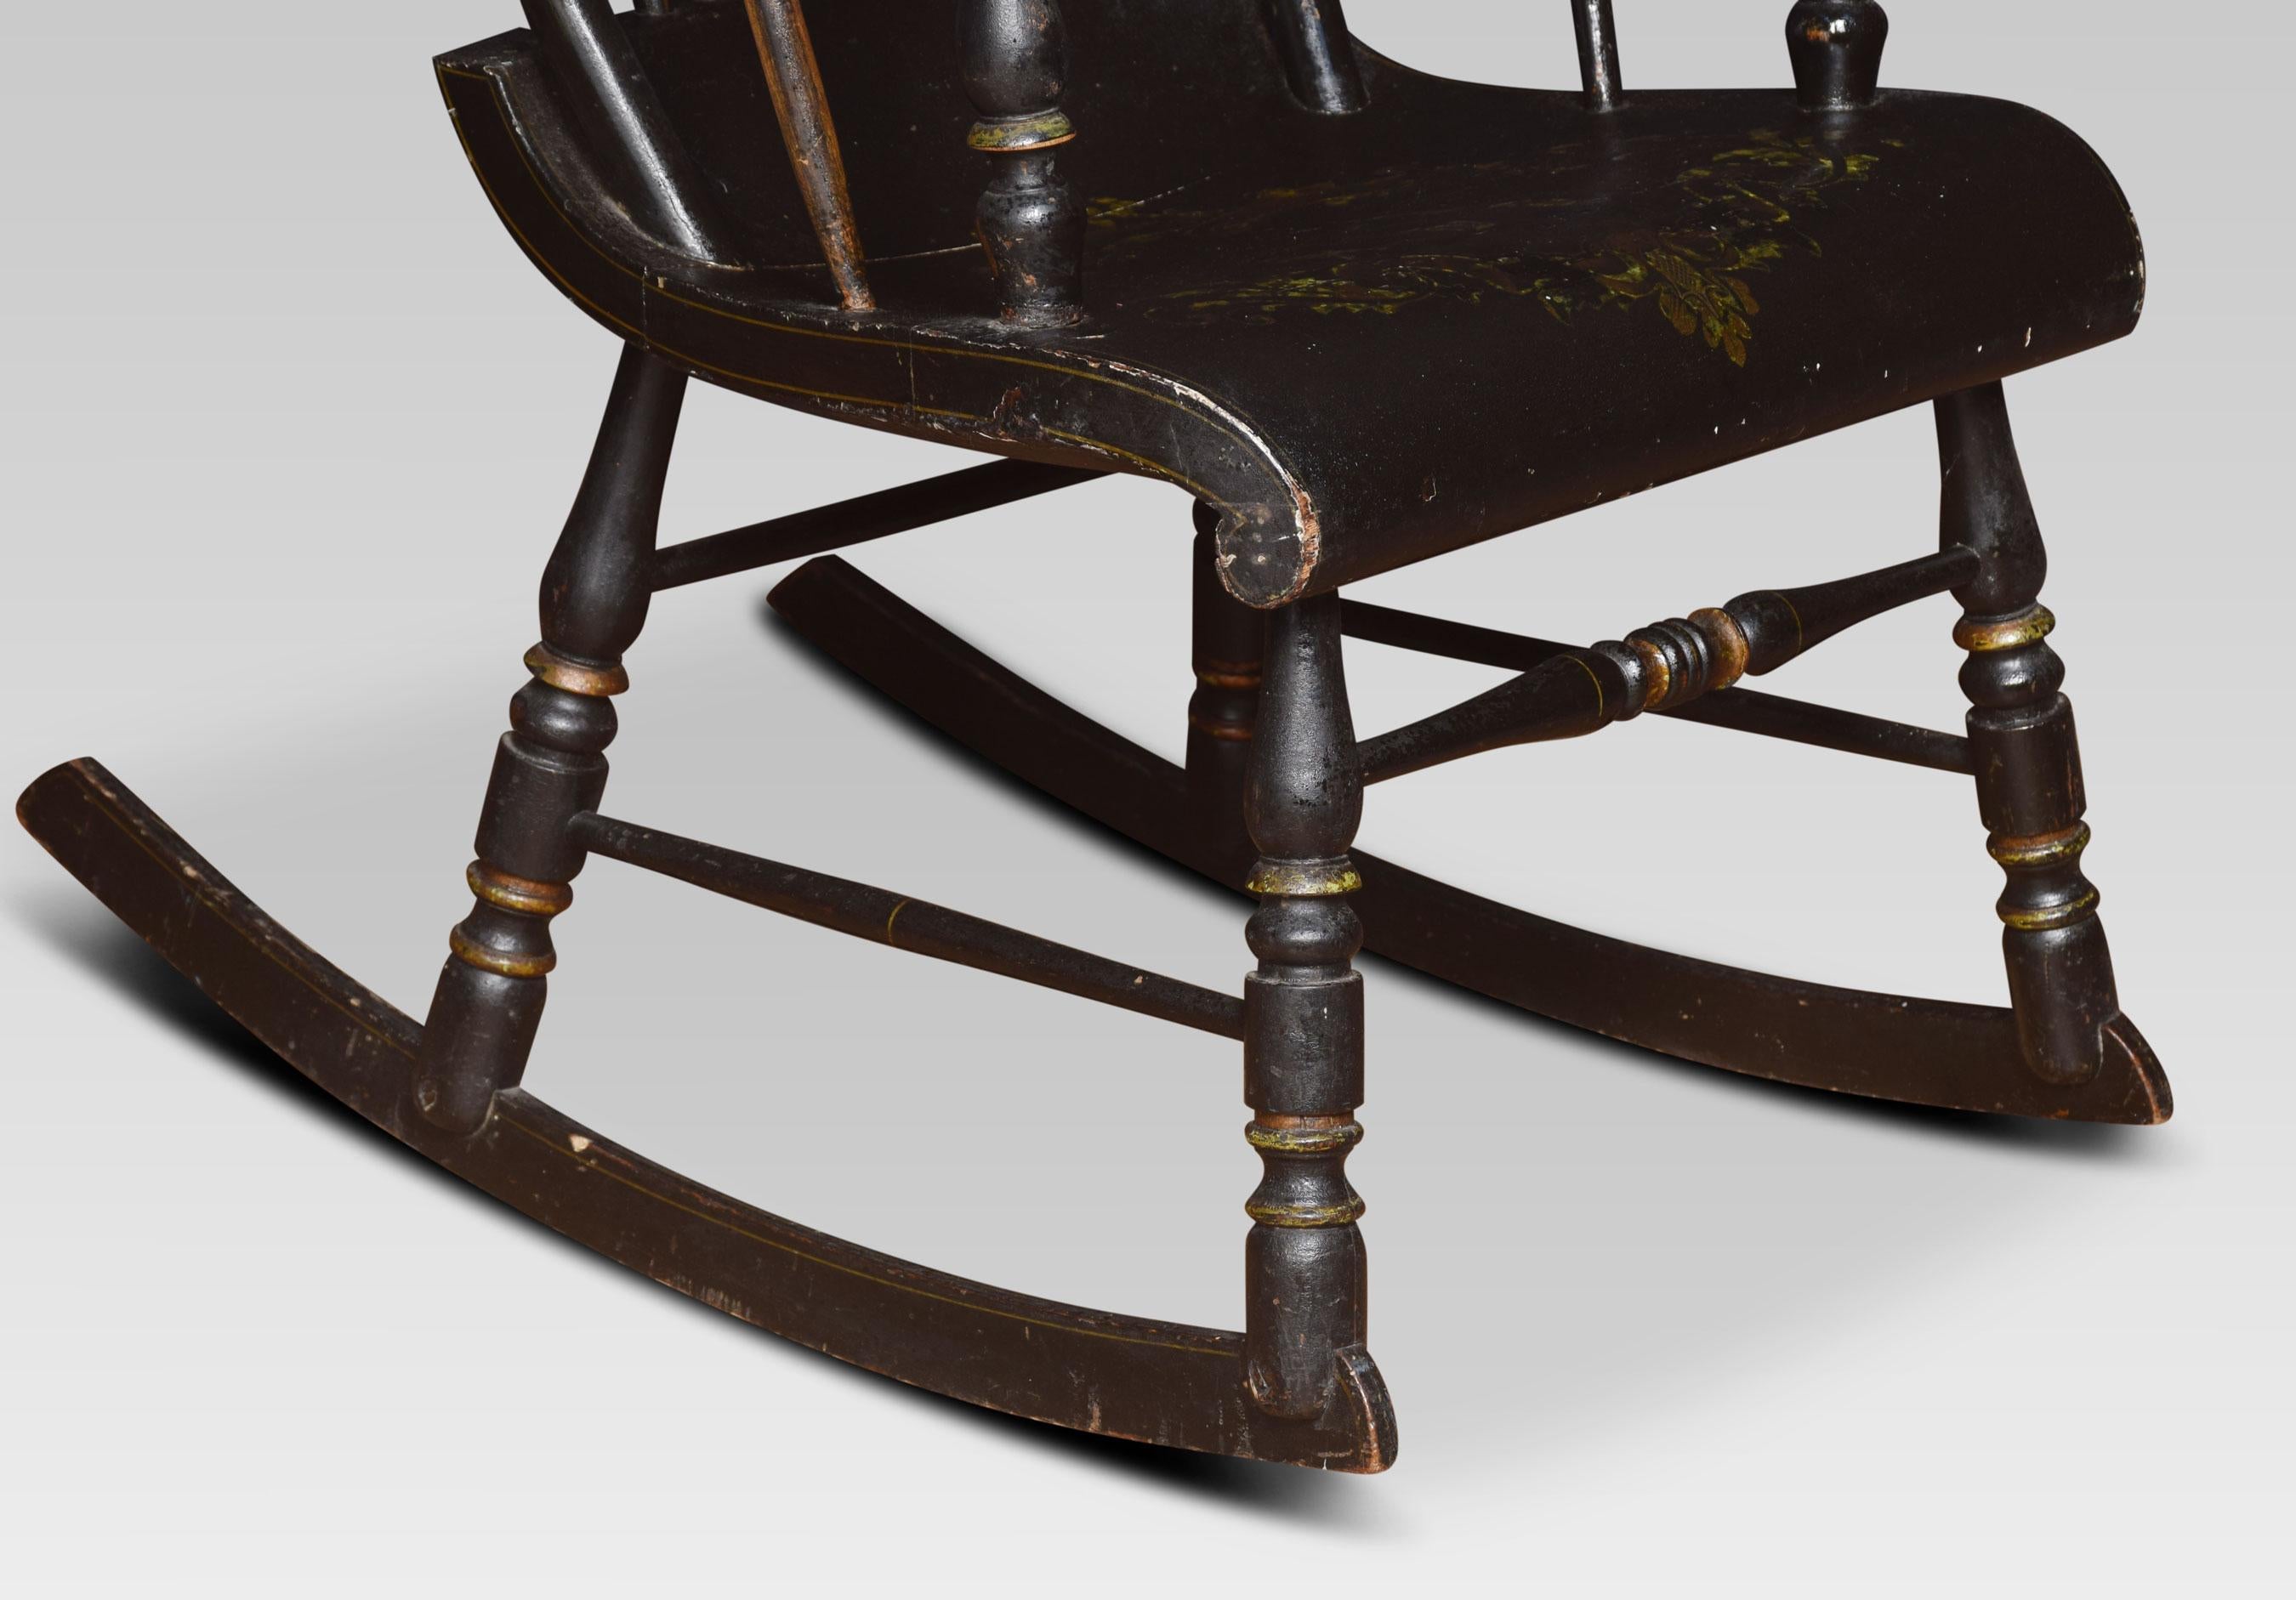 19th century rocking chairs